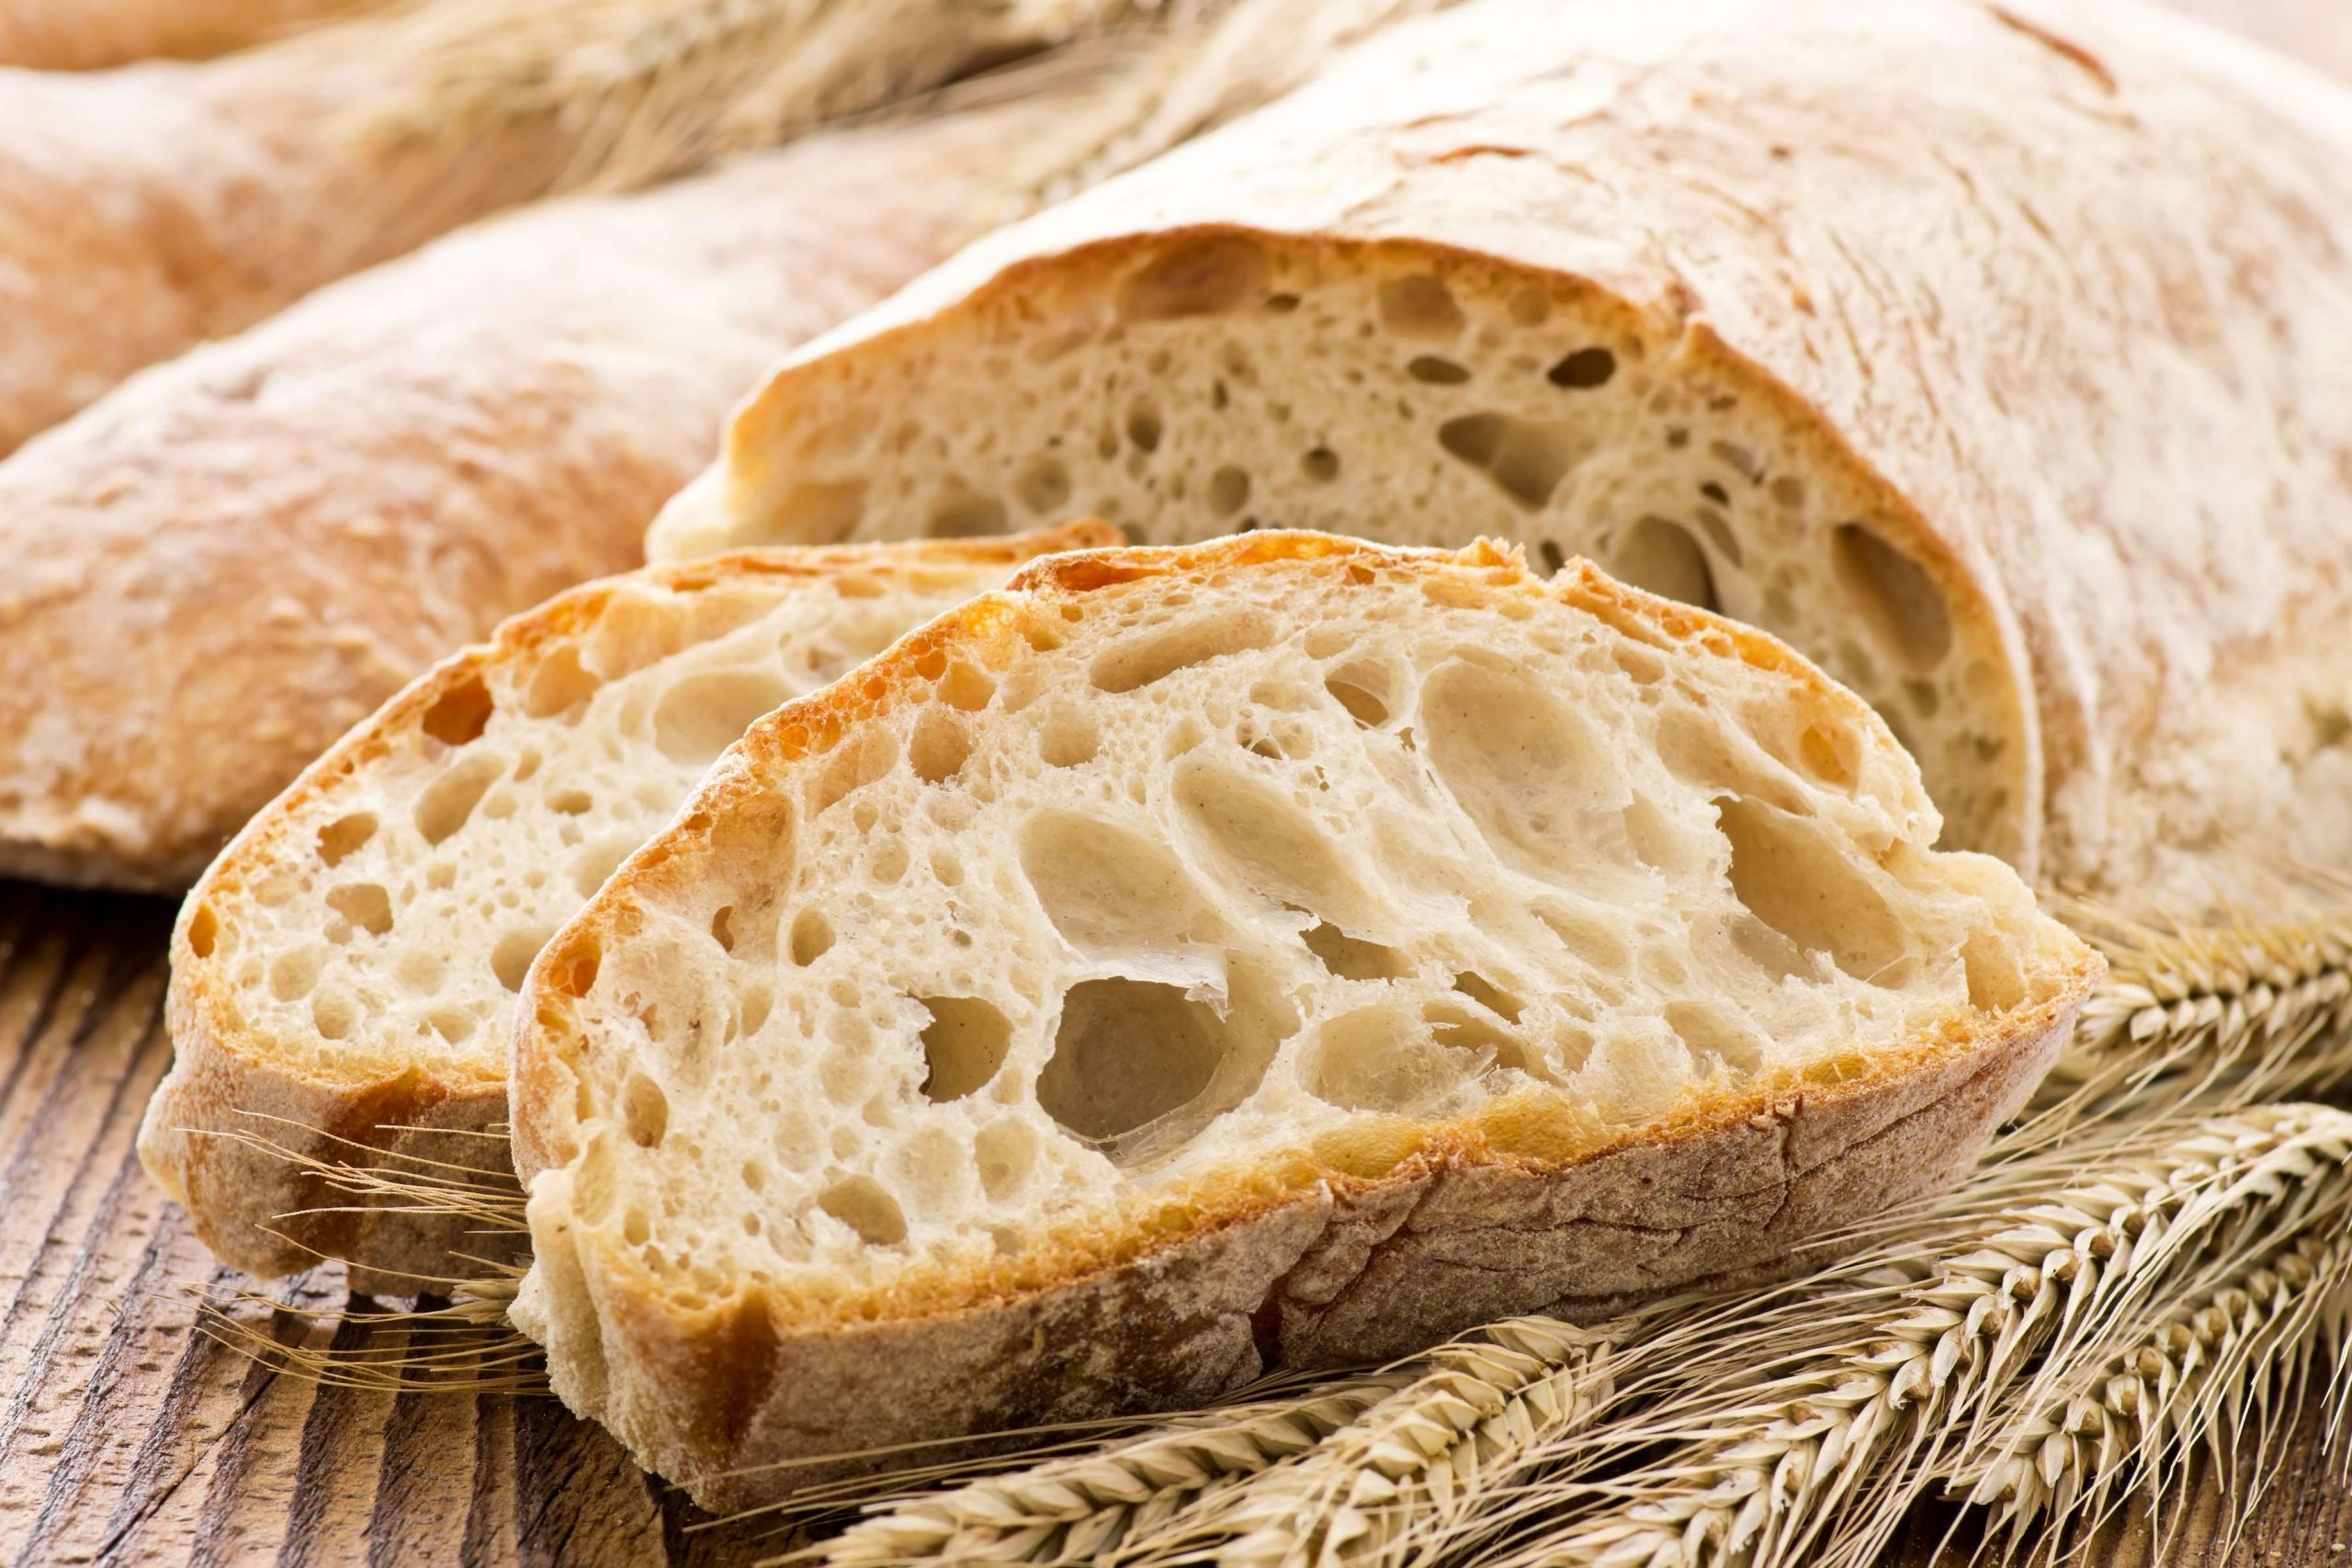 Homemade Italian Bread
 Italian Bread Recipe